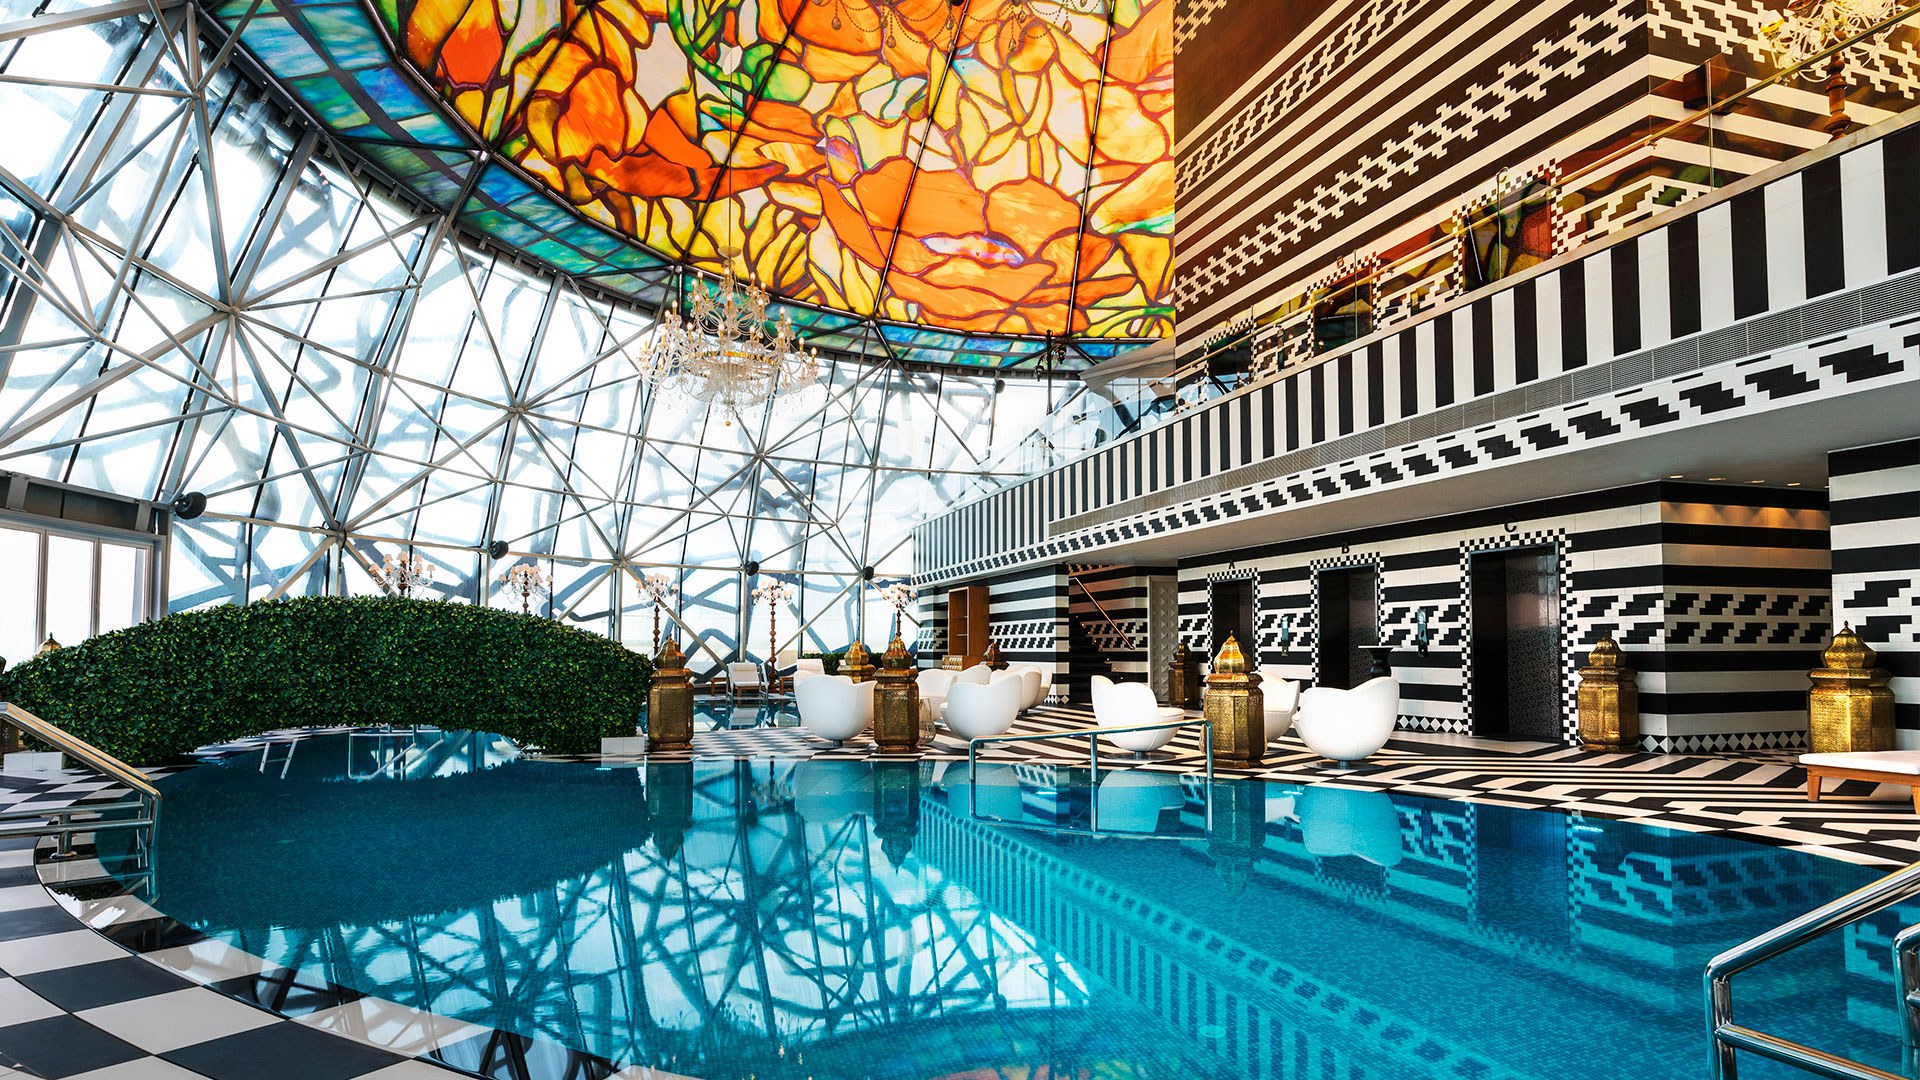 The Mondrian Hotel Pool Area